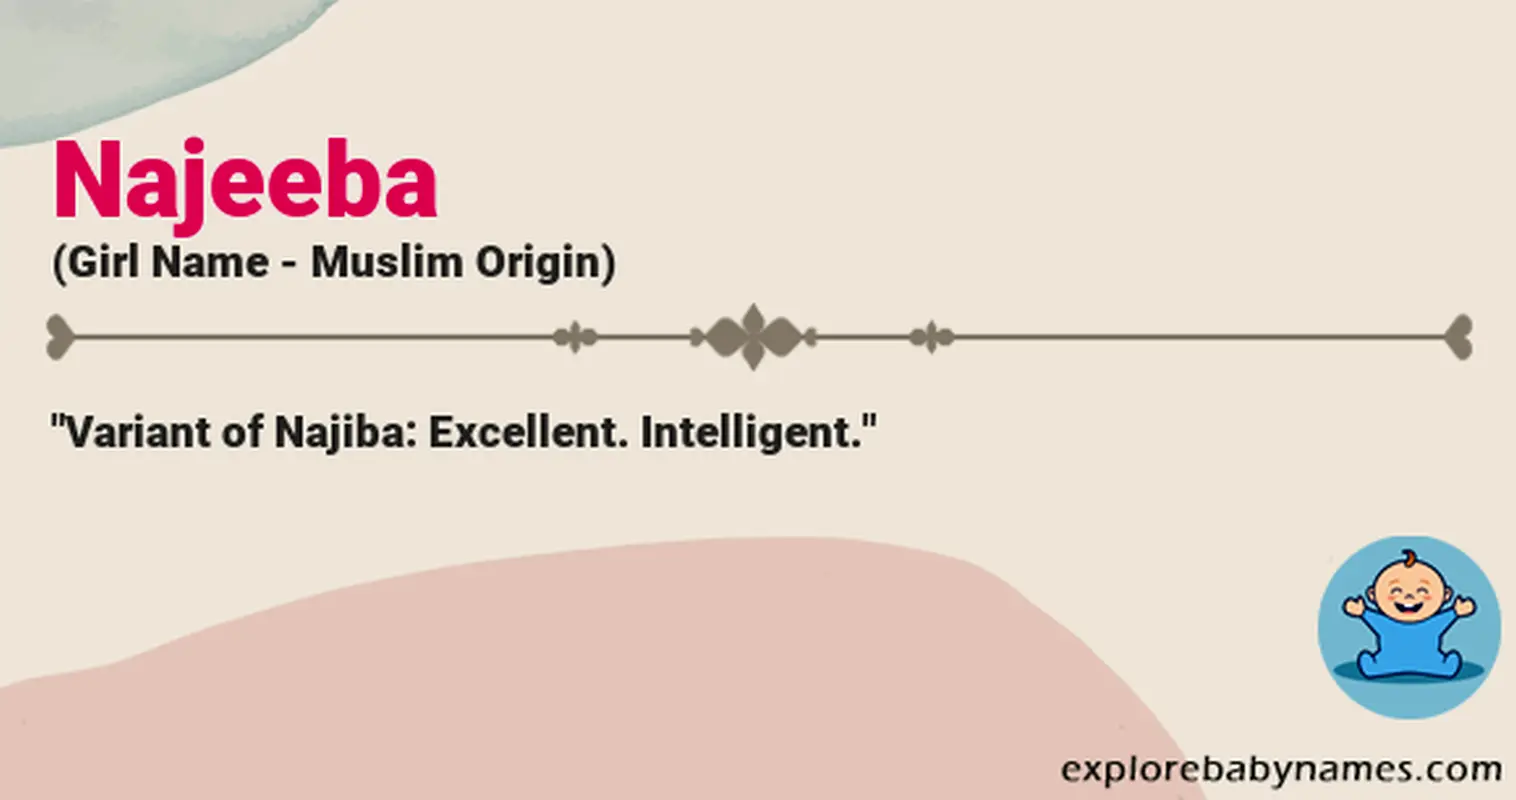 Meaning of Najeeba